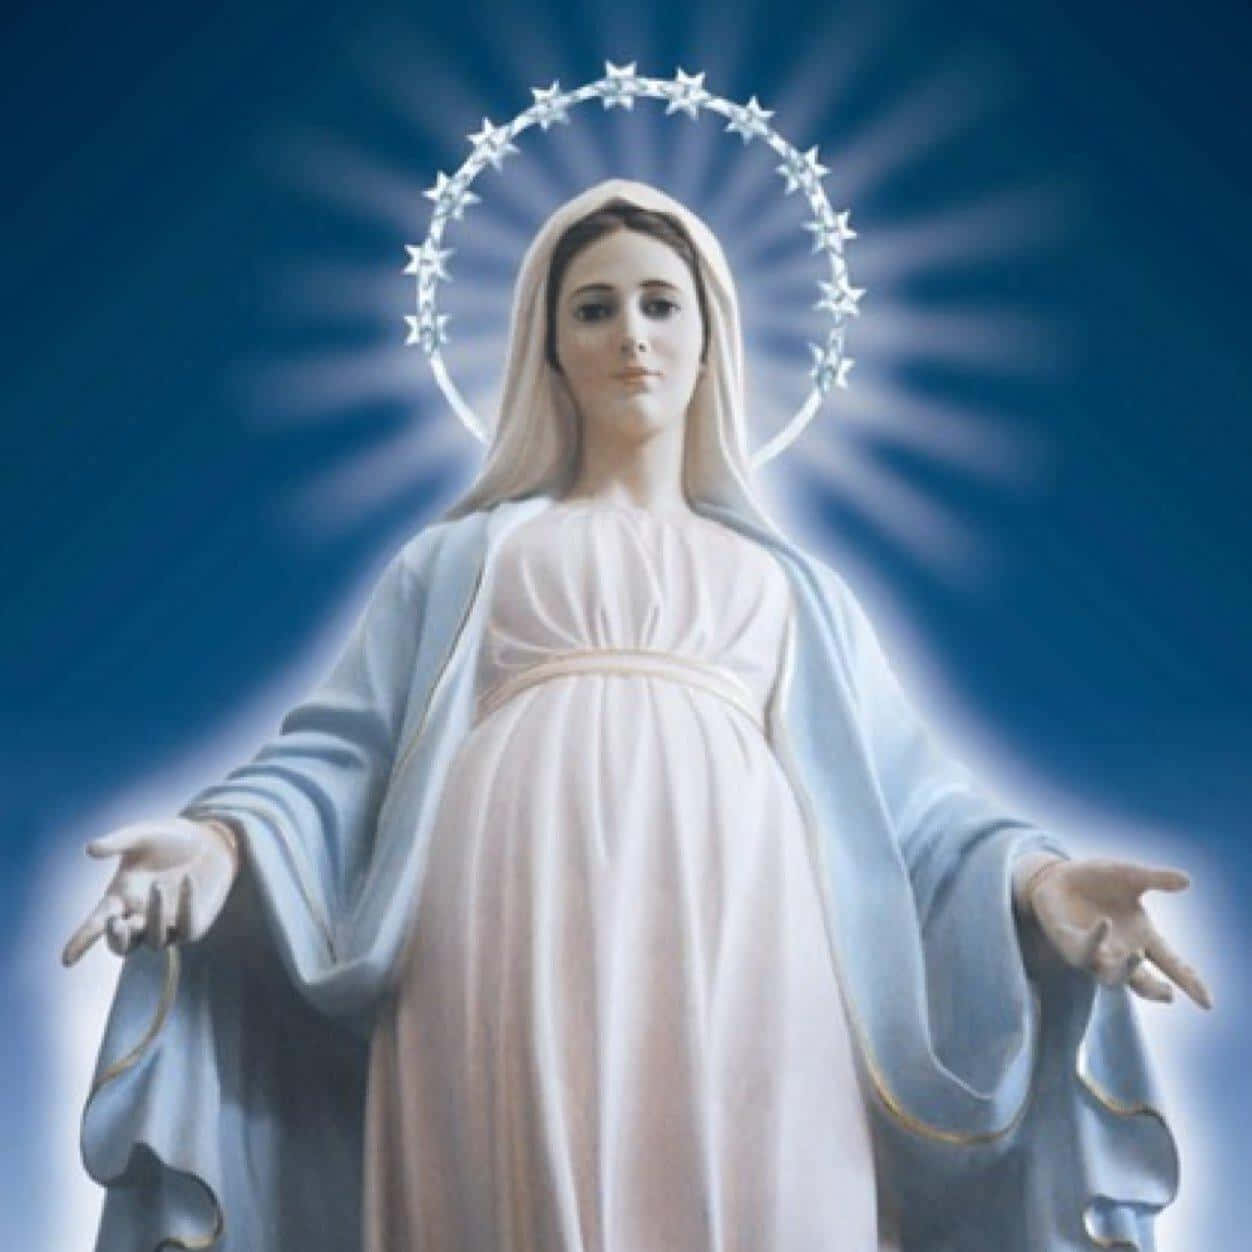 Mother Mary - A Pillar Of Strength Wallpaper